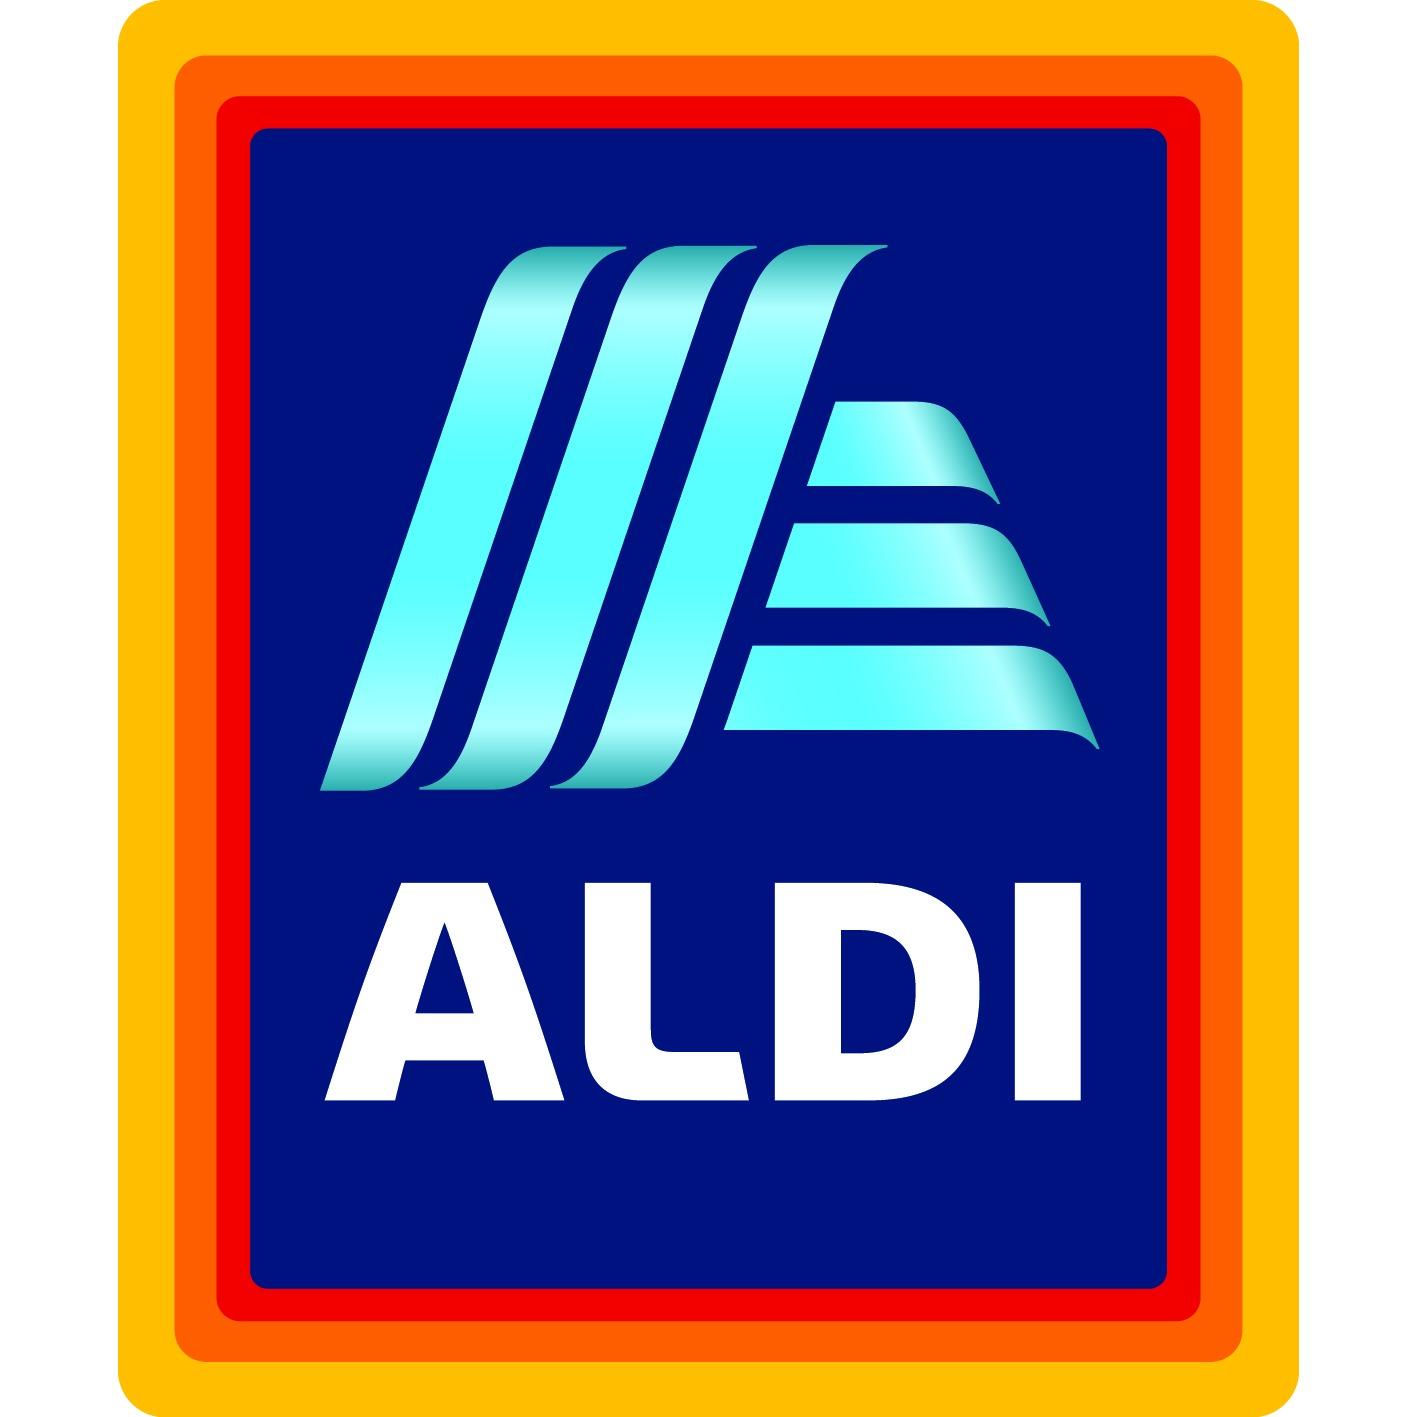 ALDI - Closed